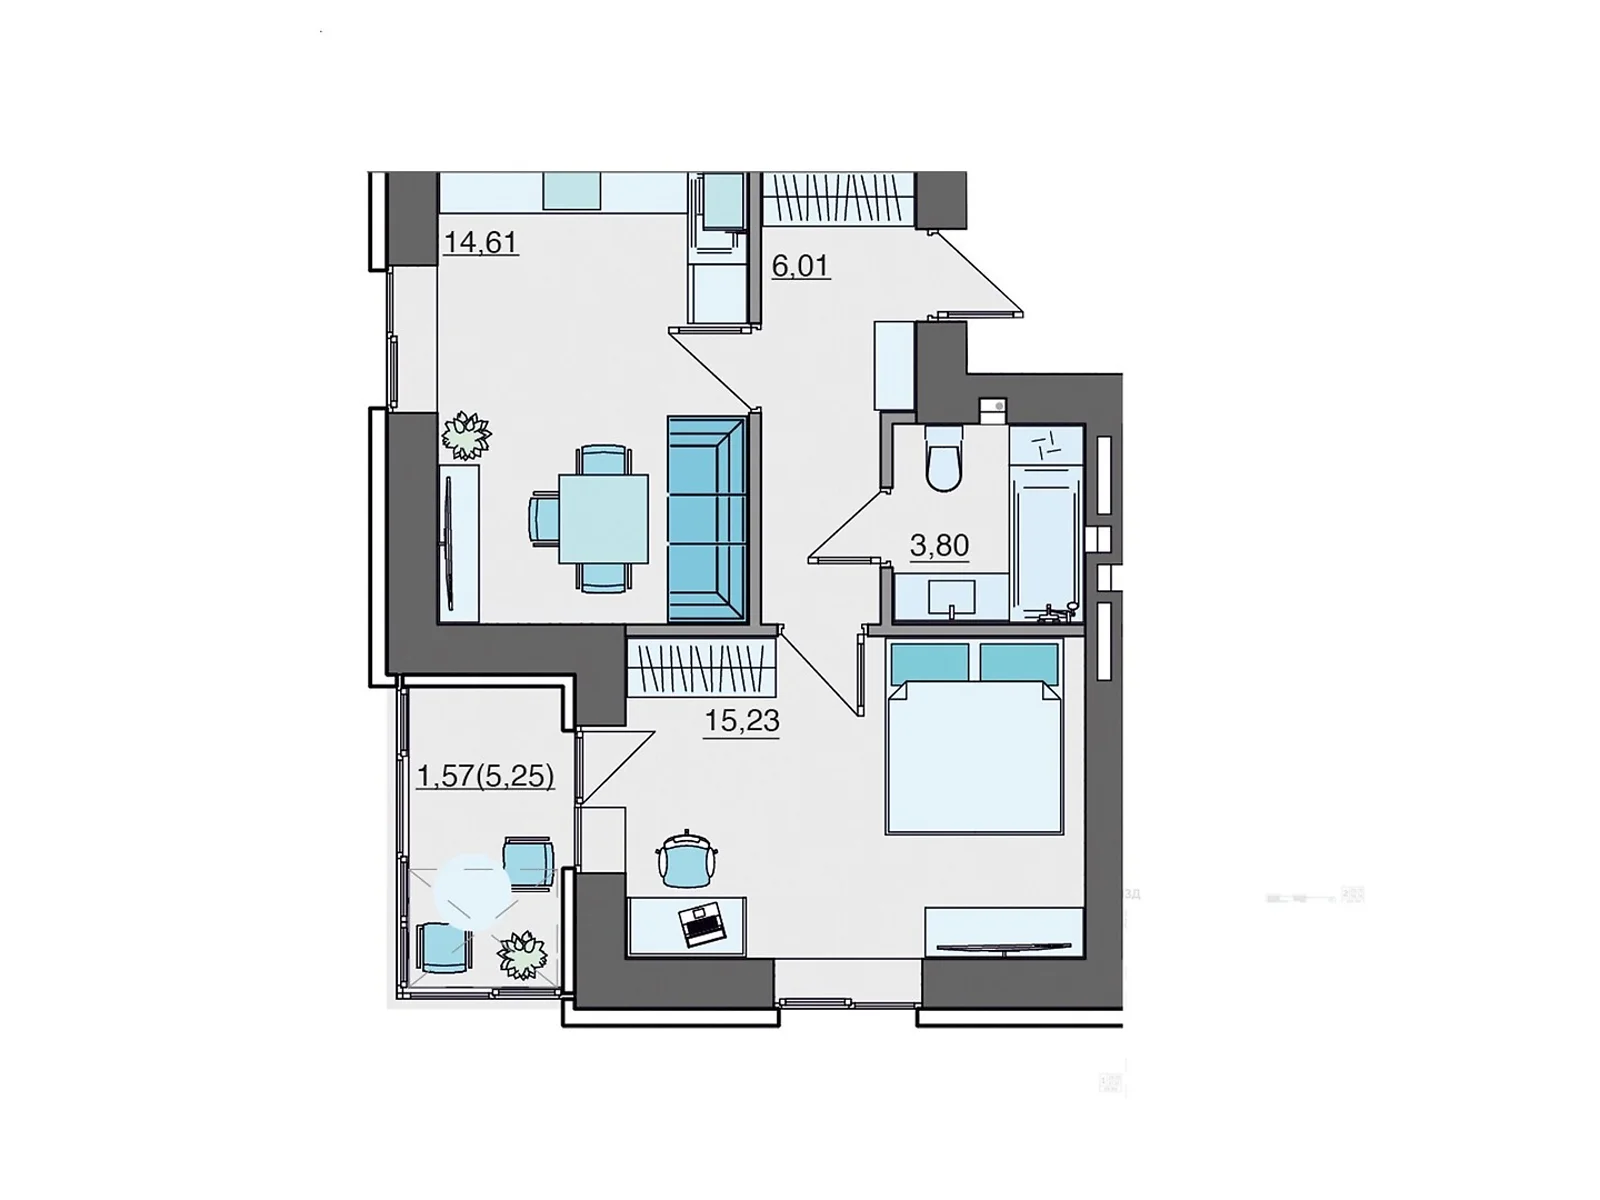 1-кімнатна квартира 41.22 кв. м у Луцьку, цена: 36225 $ - фото 1